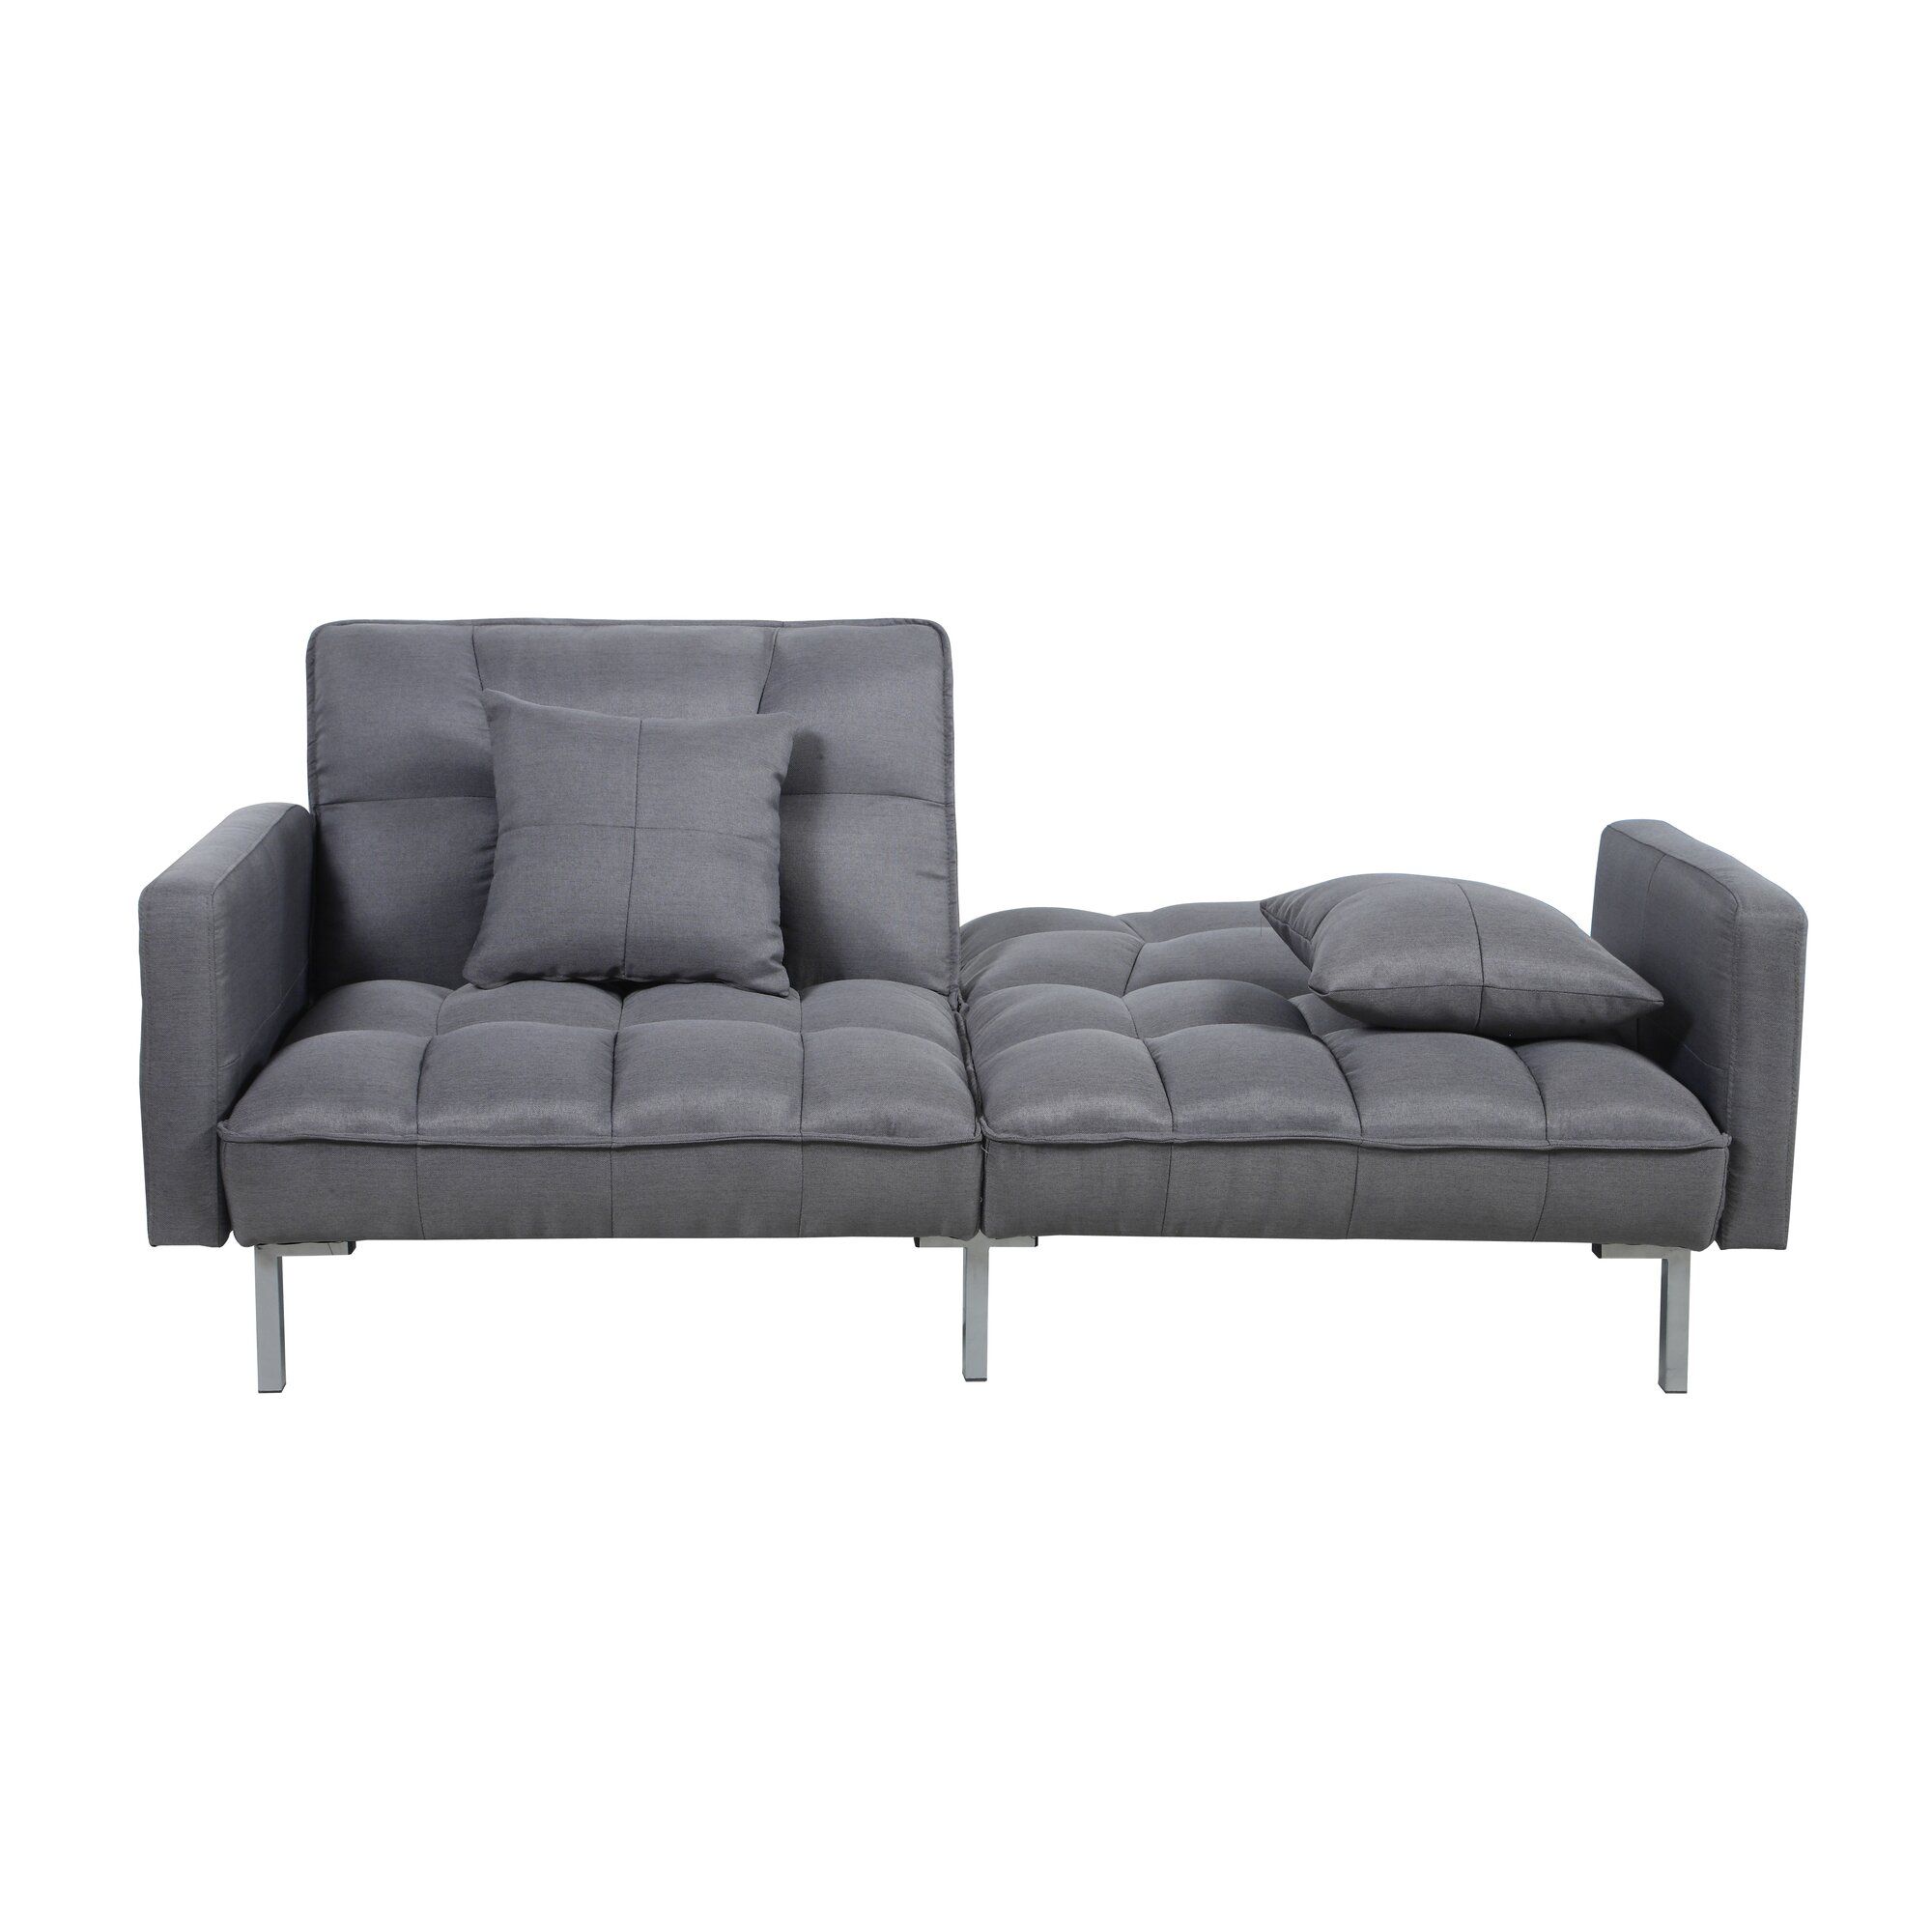 Convertible Sofa & Reviews | Allmodern Inside 8 Seat Convertible Sofas (Gallery 19 of 20)